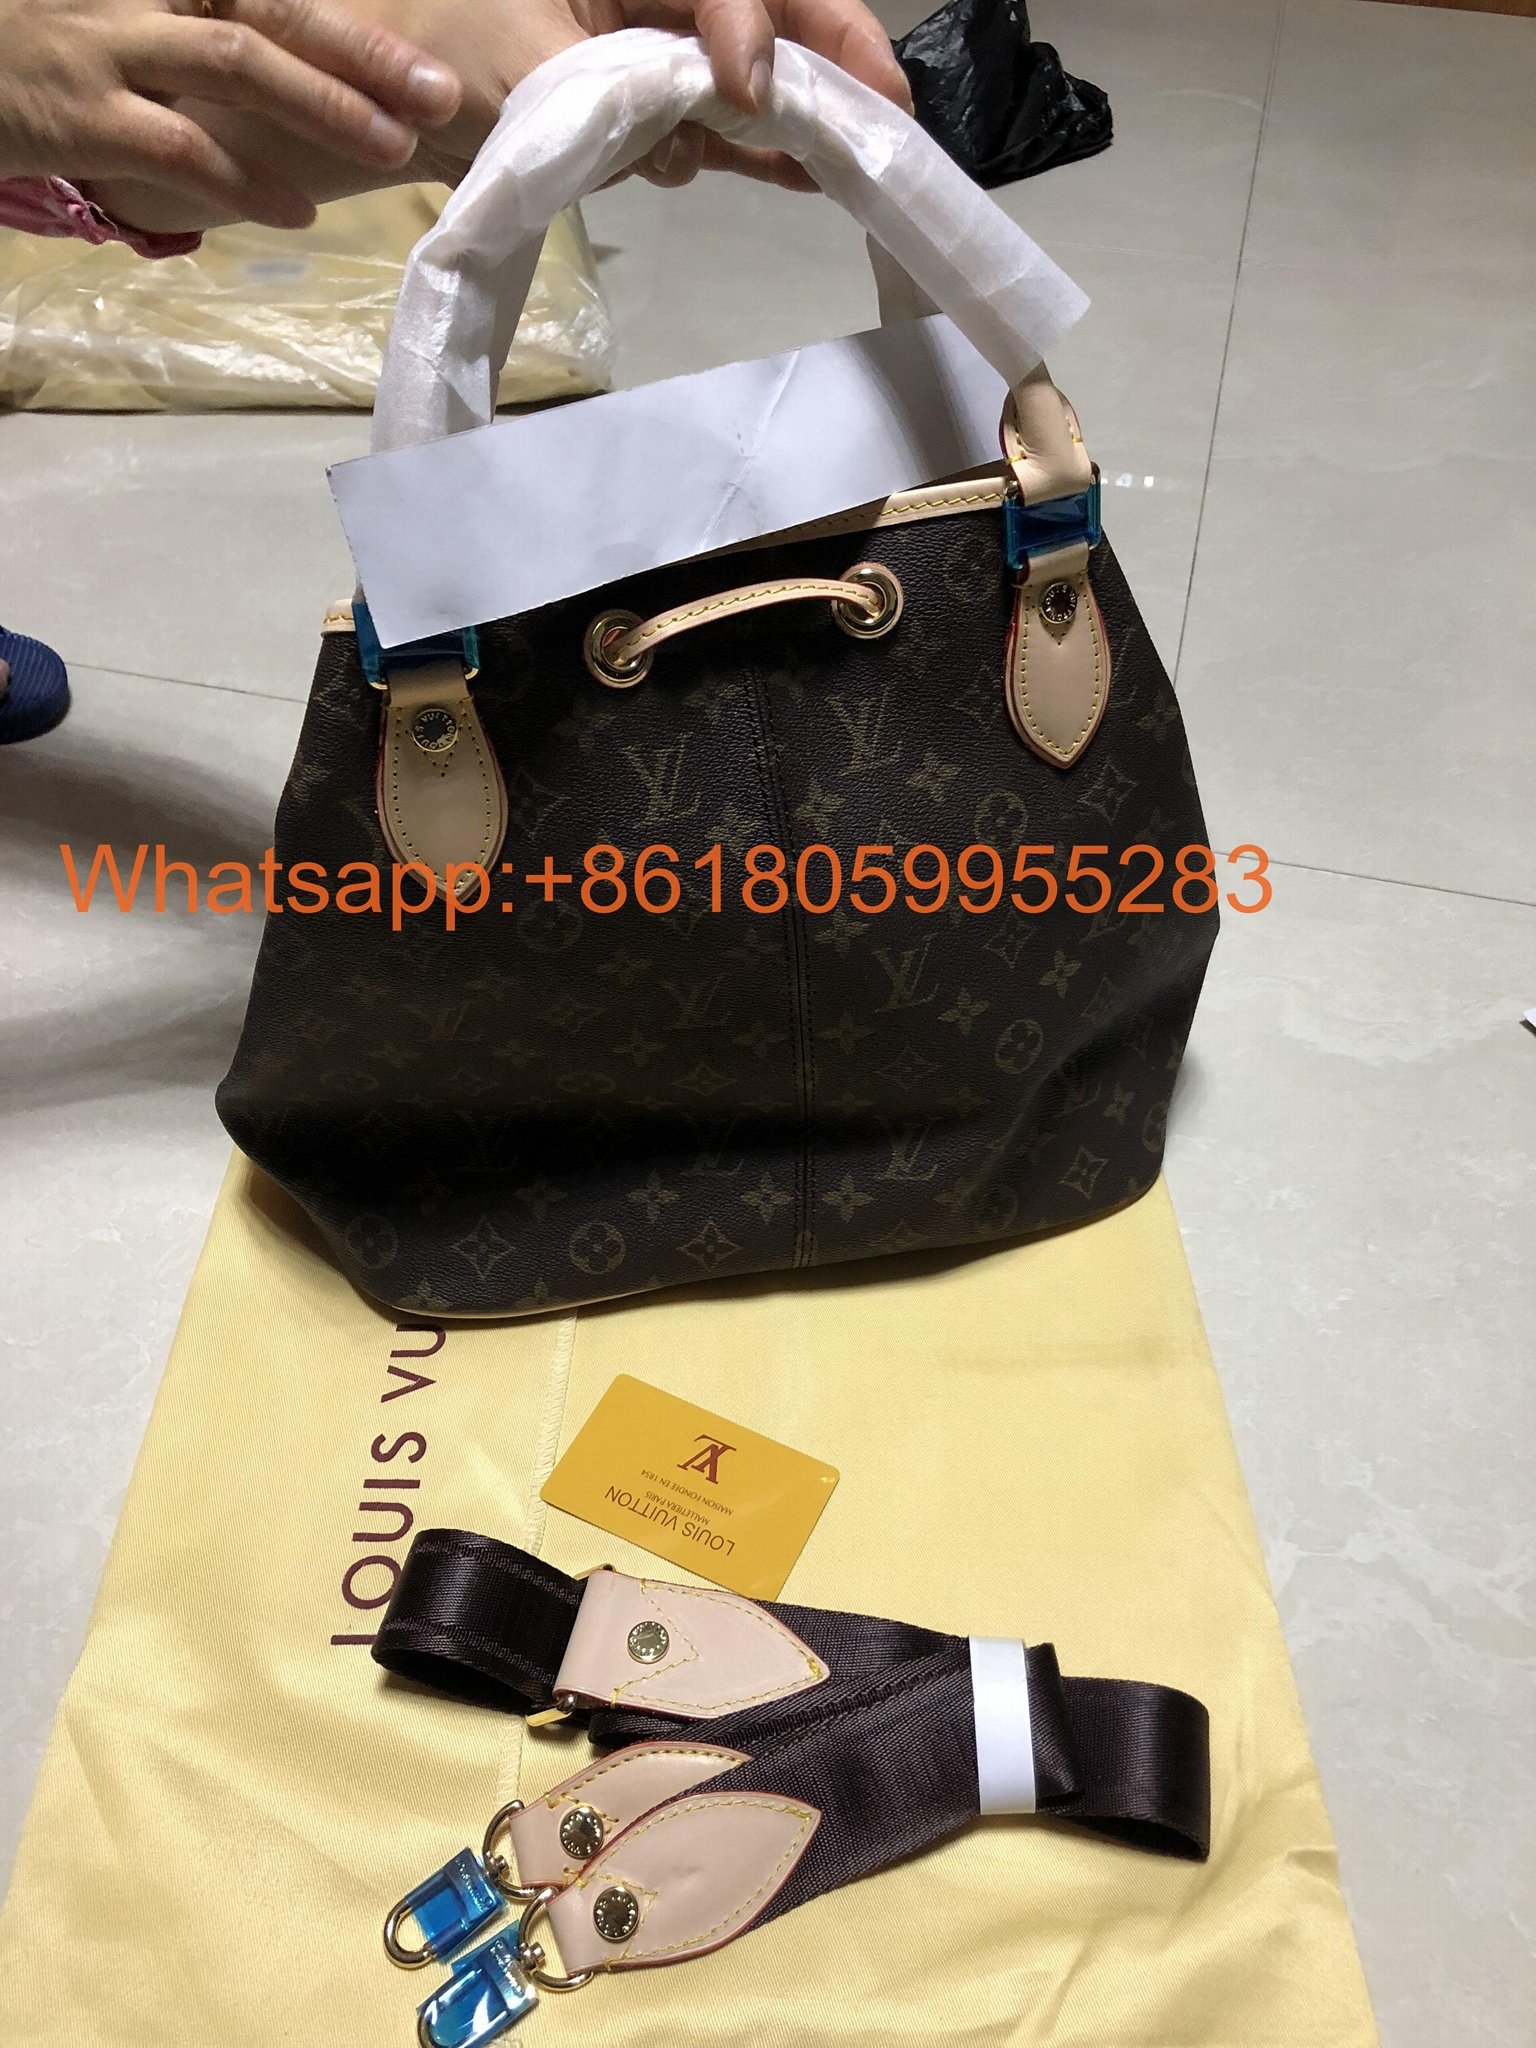 New Louis Vuitton handBag LV handbag lv bag lv backpack LV wallets lv purse sale